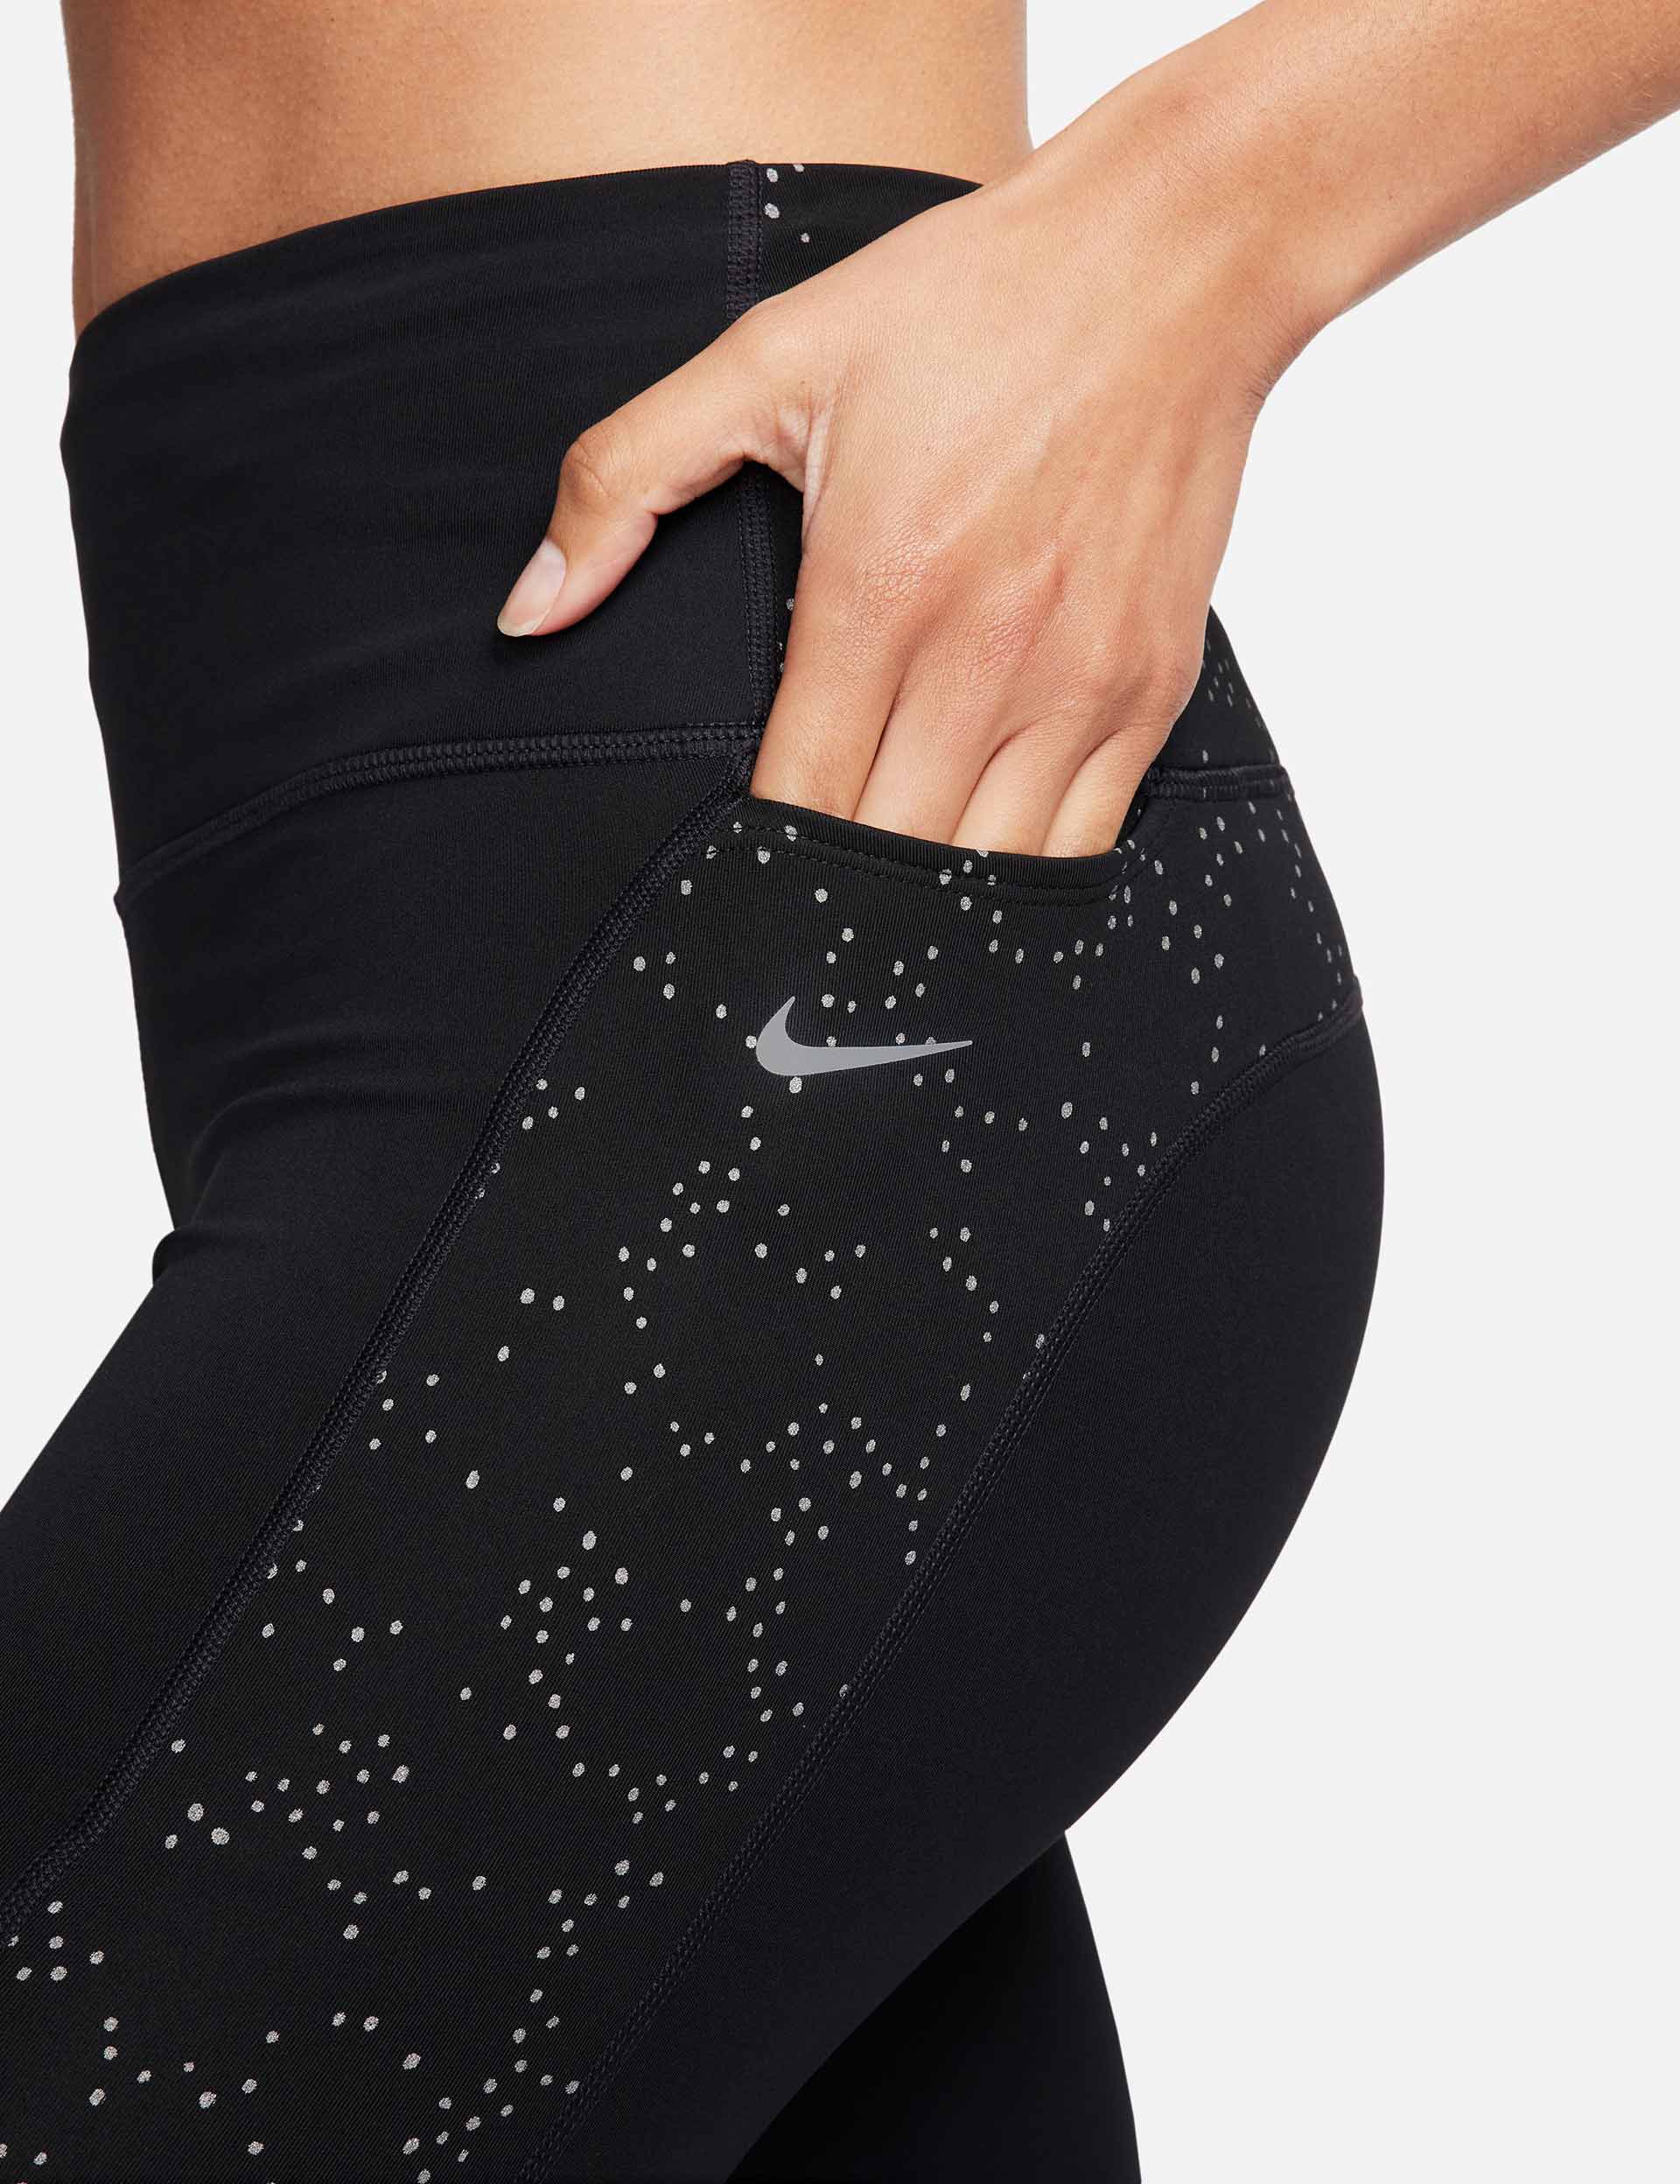 Nike Women's Logo Dri-Fit High Rise 7/8 Tight Running Pants (Fuchsia, X- Small) 